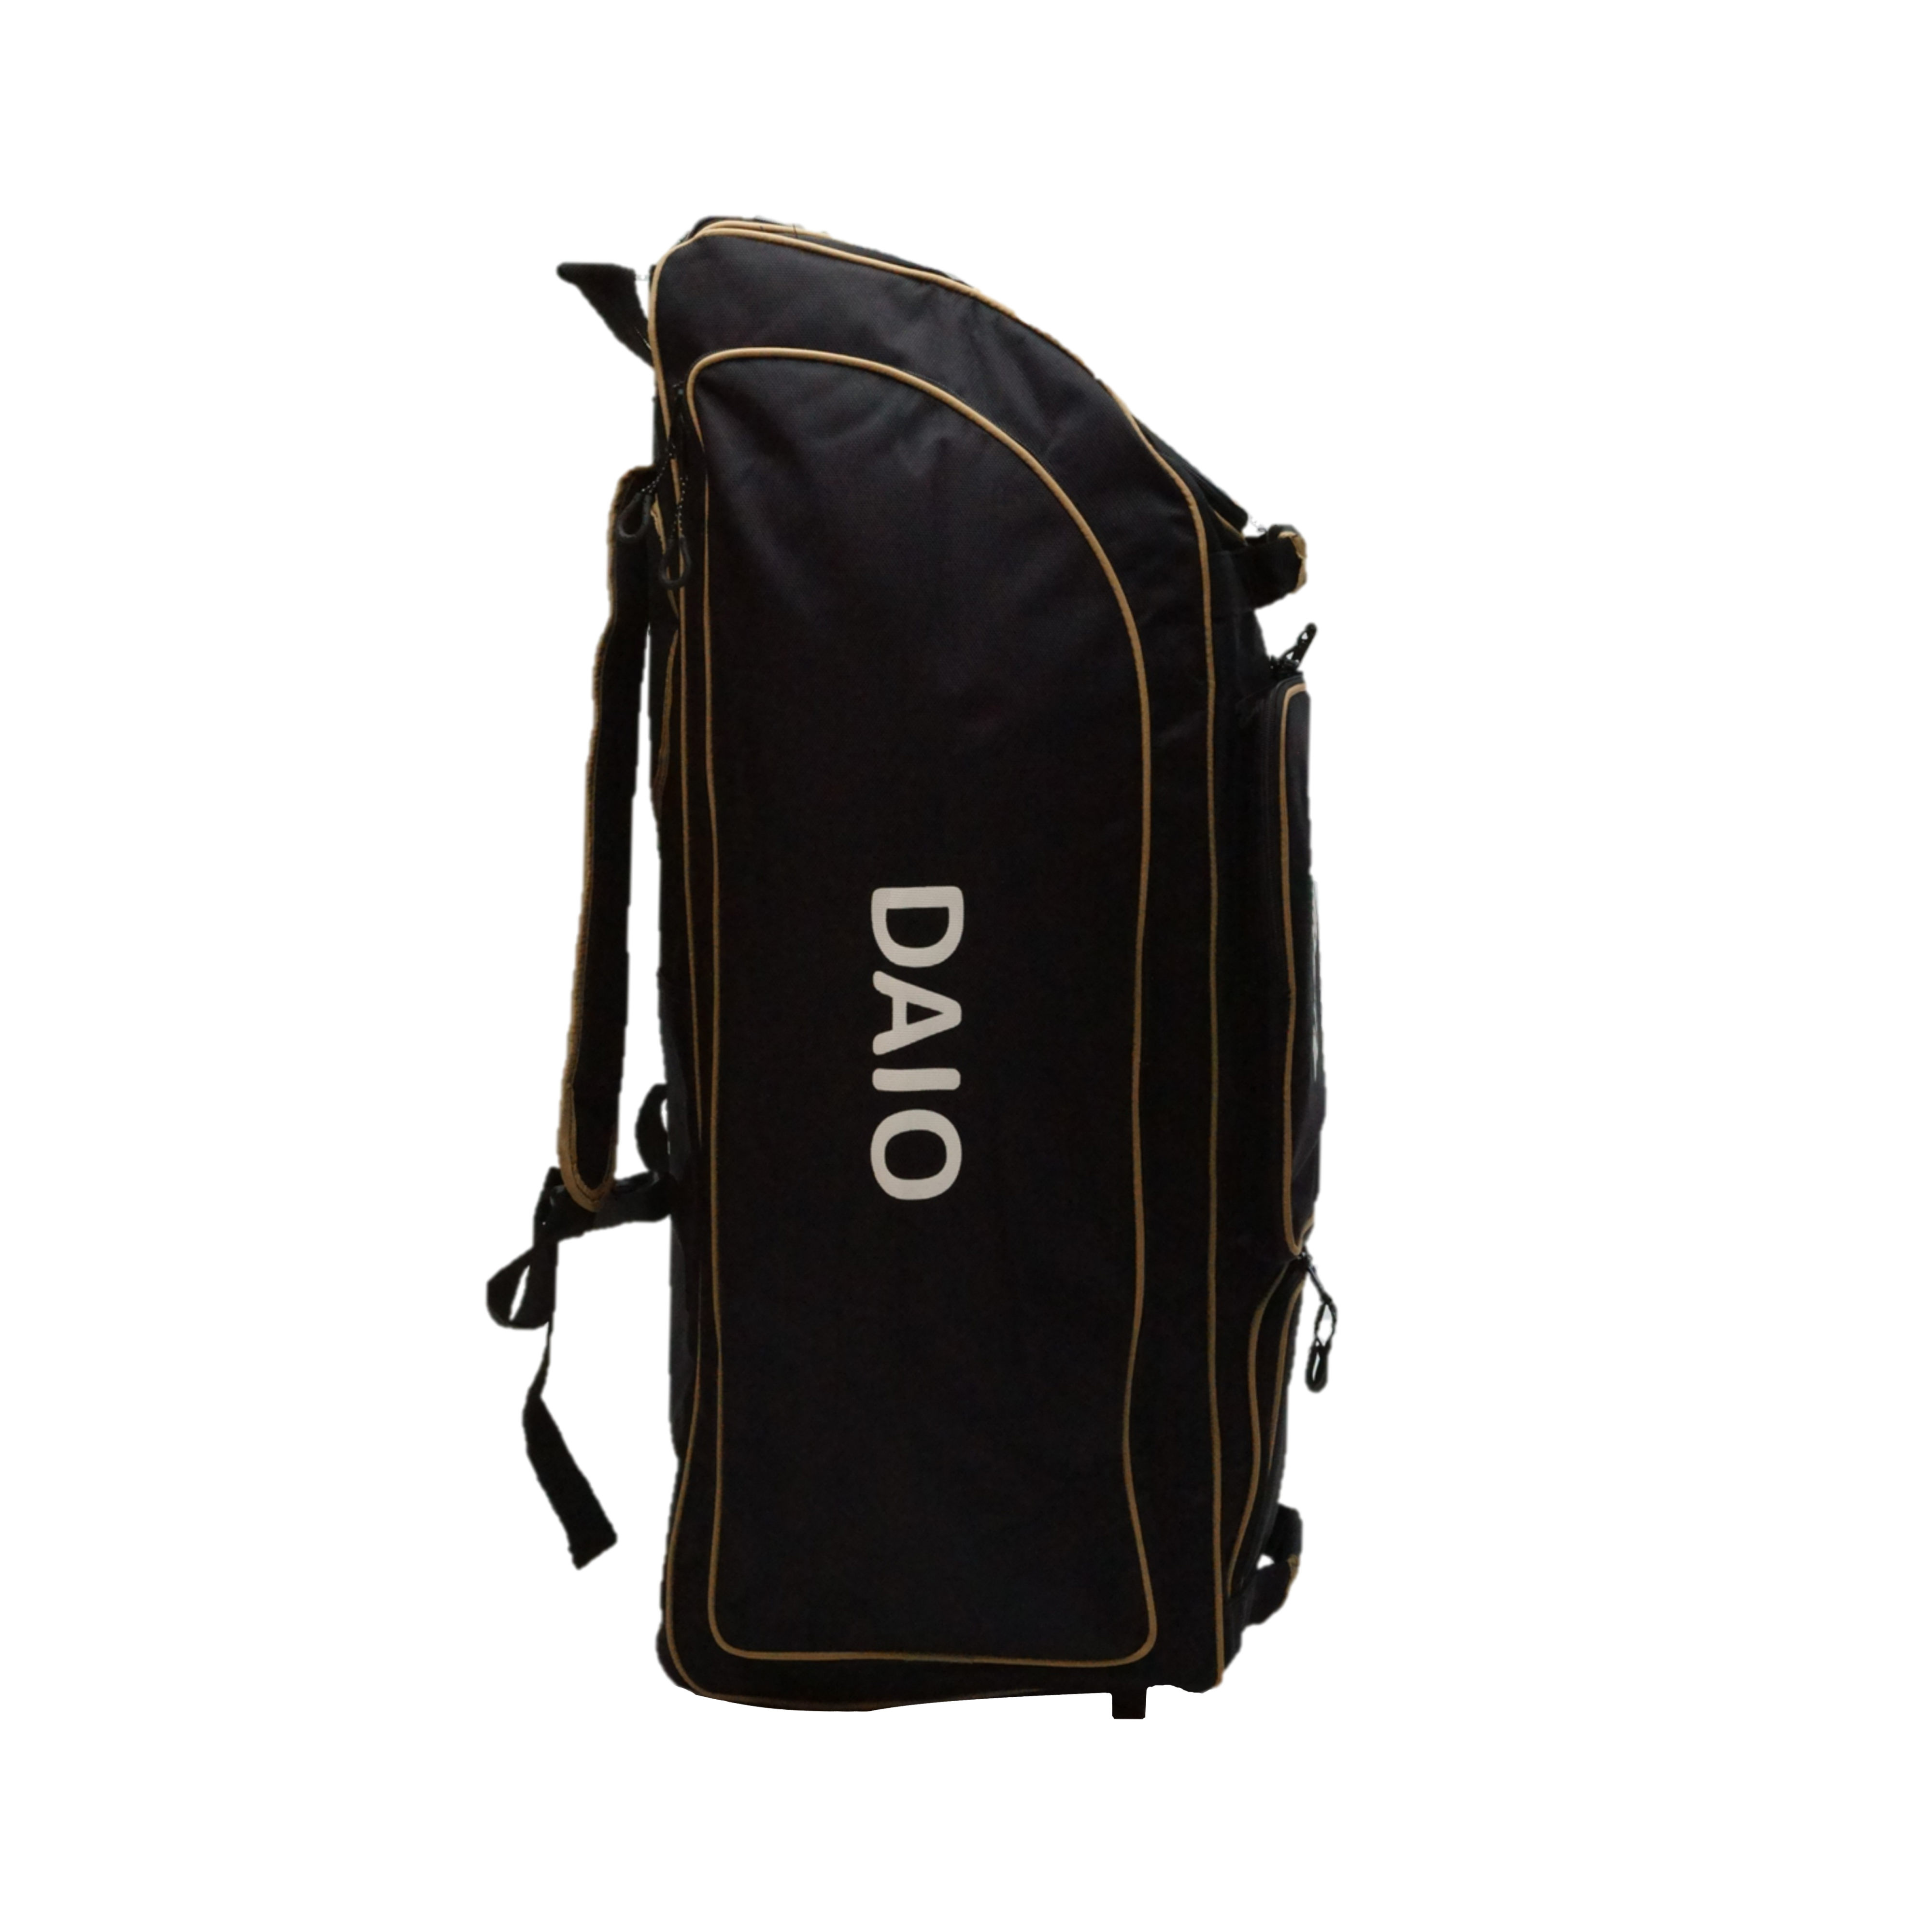 Daio players edition duffle cricket kit bag size xl